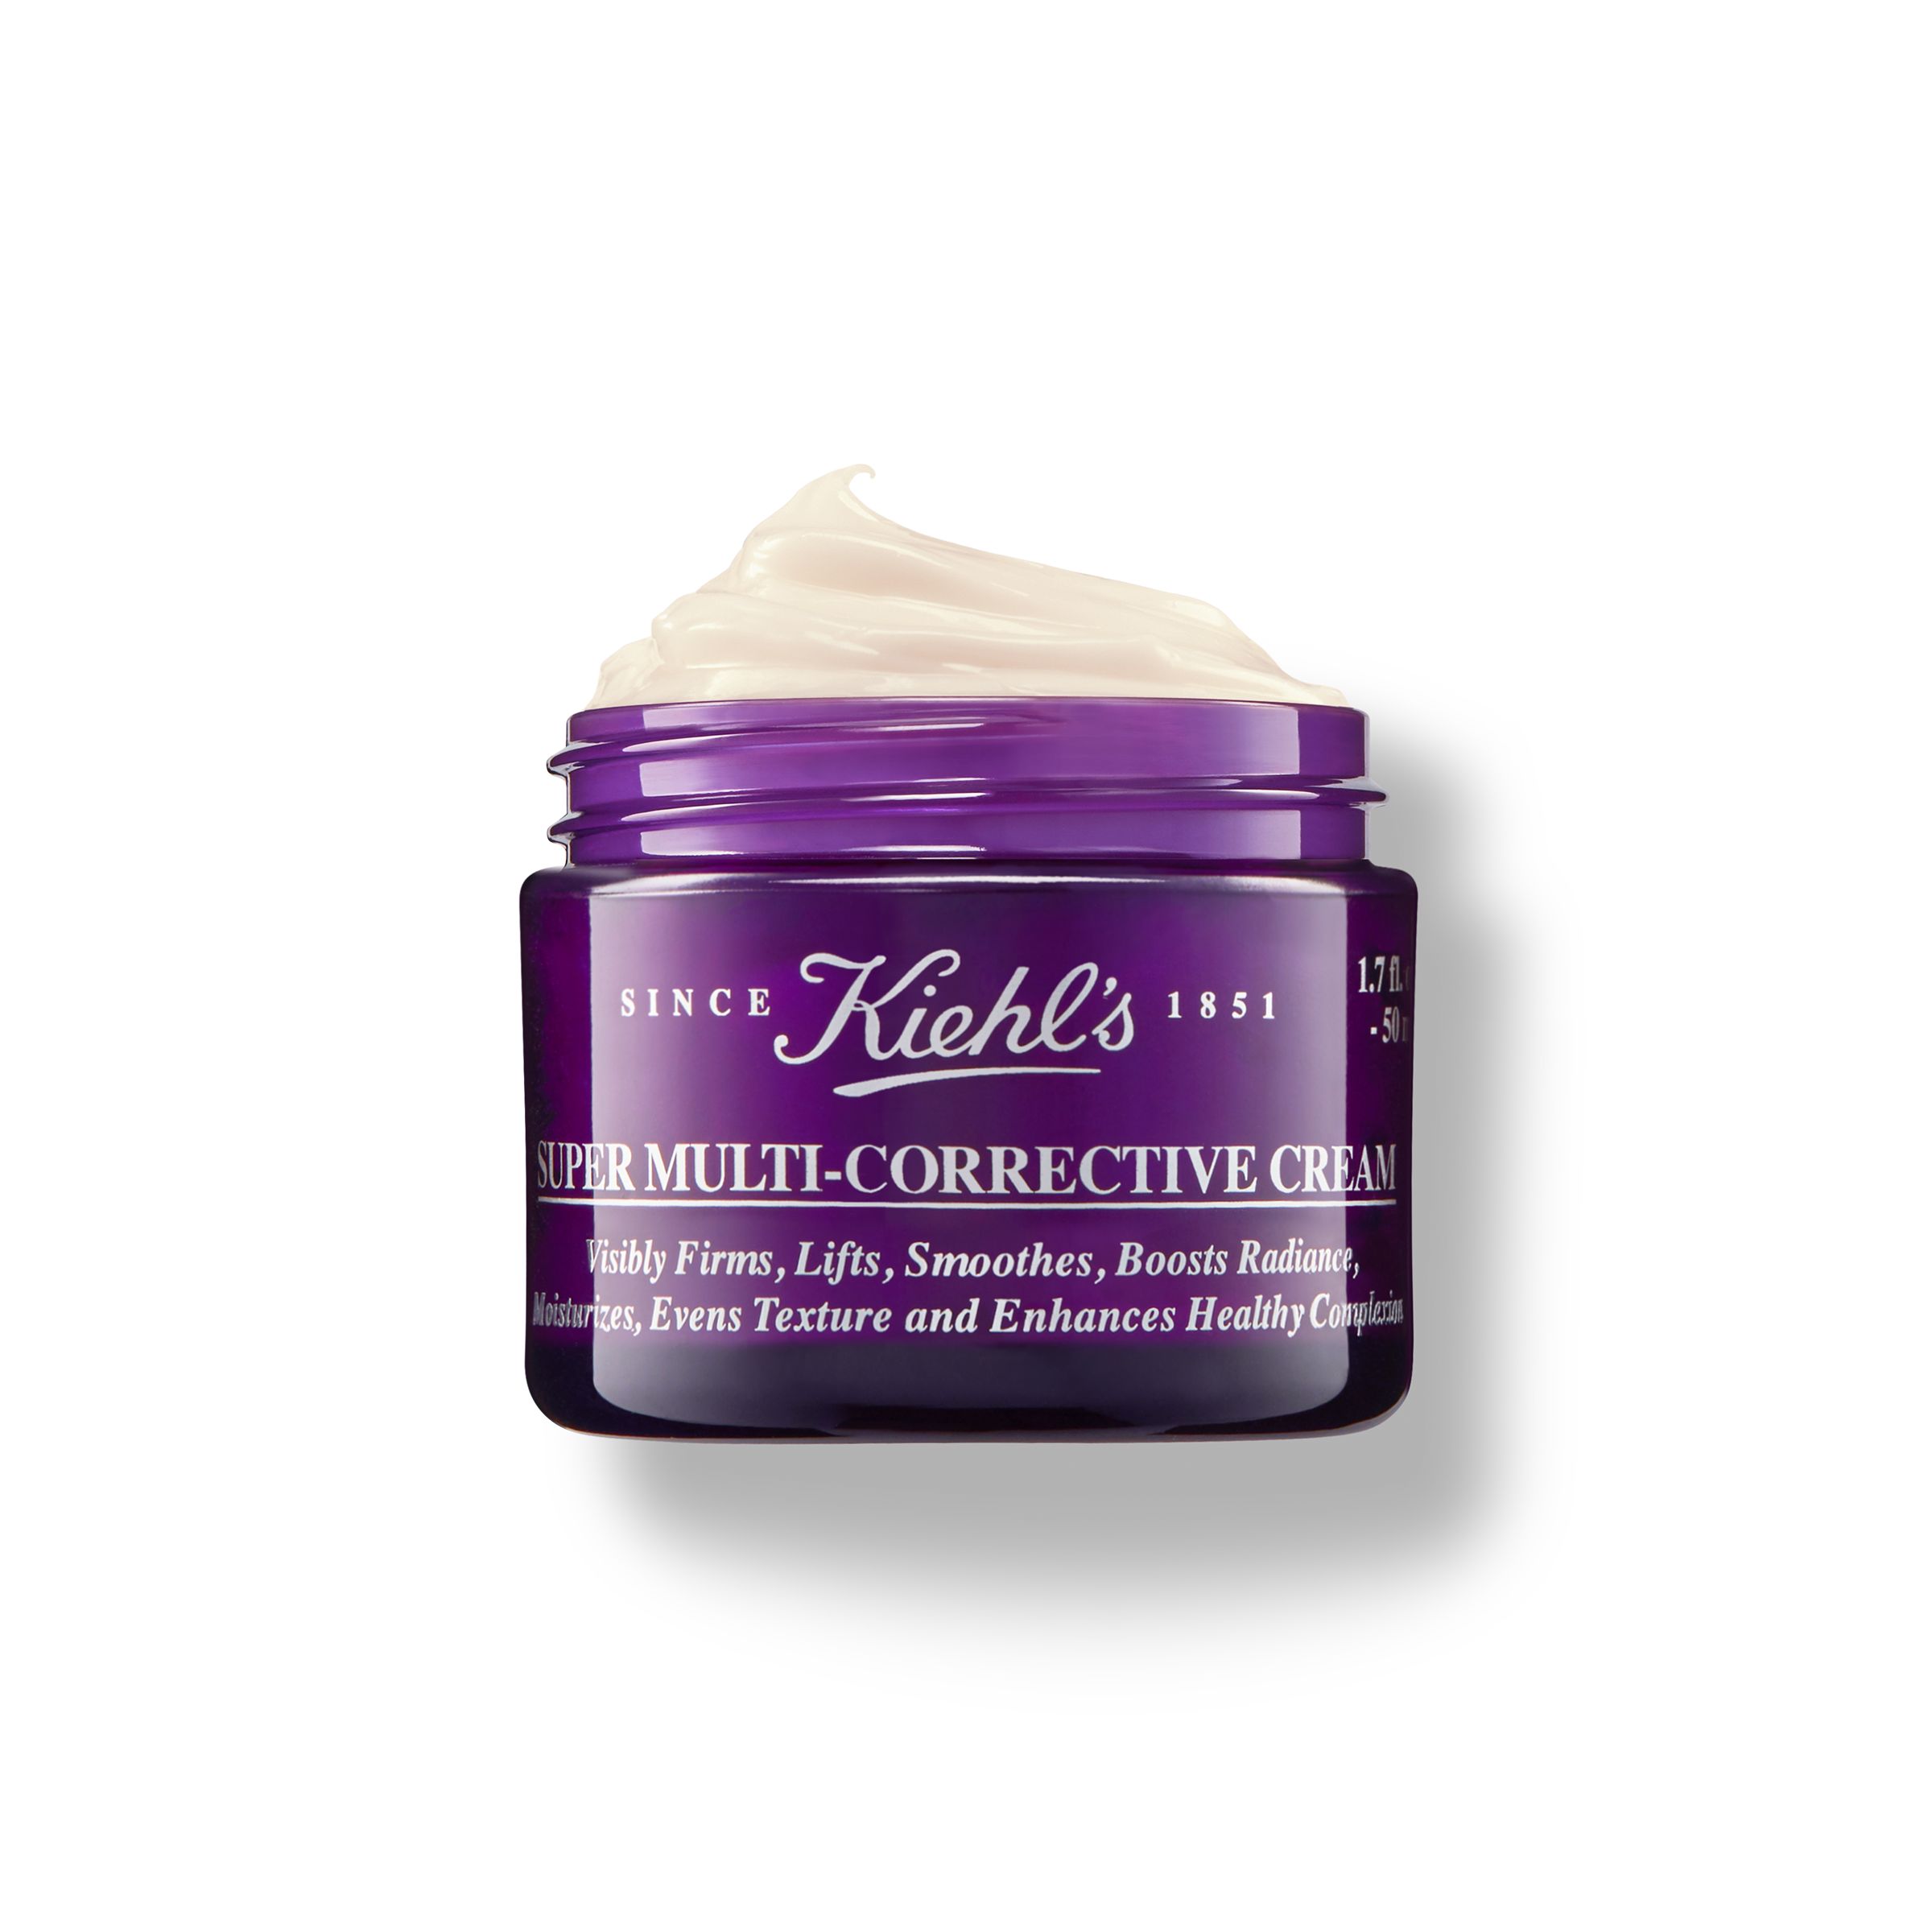 Super Multi-Corrective Anti-Aging Face Cream - Kiehl’s | Kiehl's